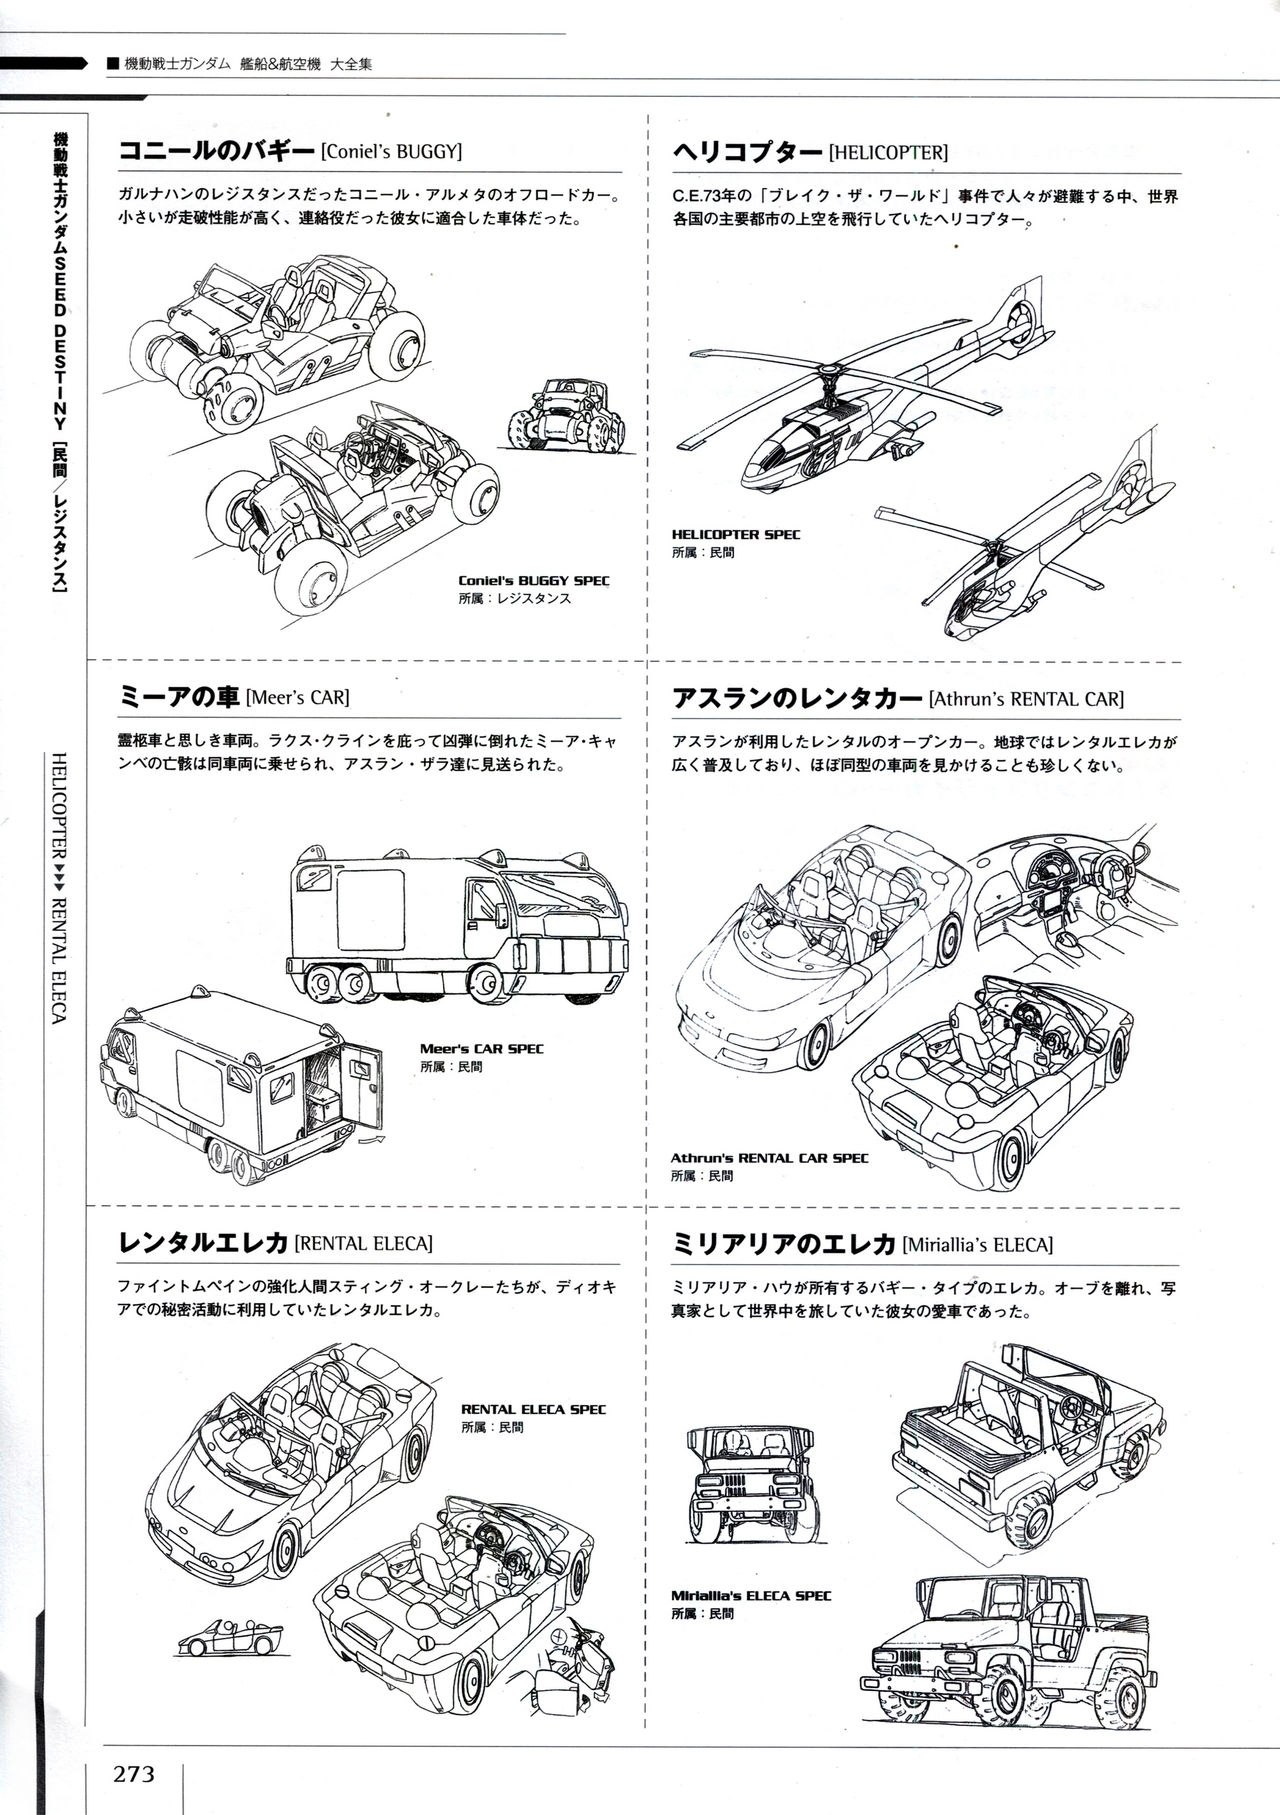 Mobile Suit Gundam - Ship & Aerospace Plane Encyclopedia - Revised Edition 278